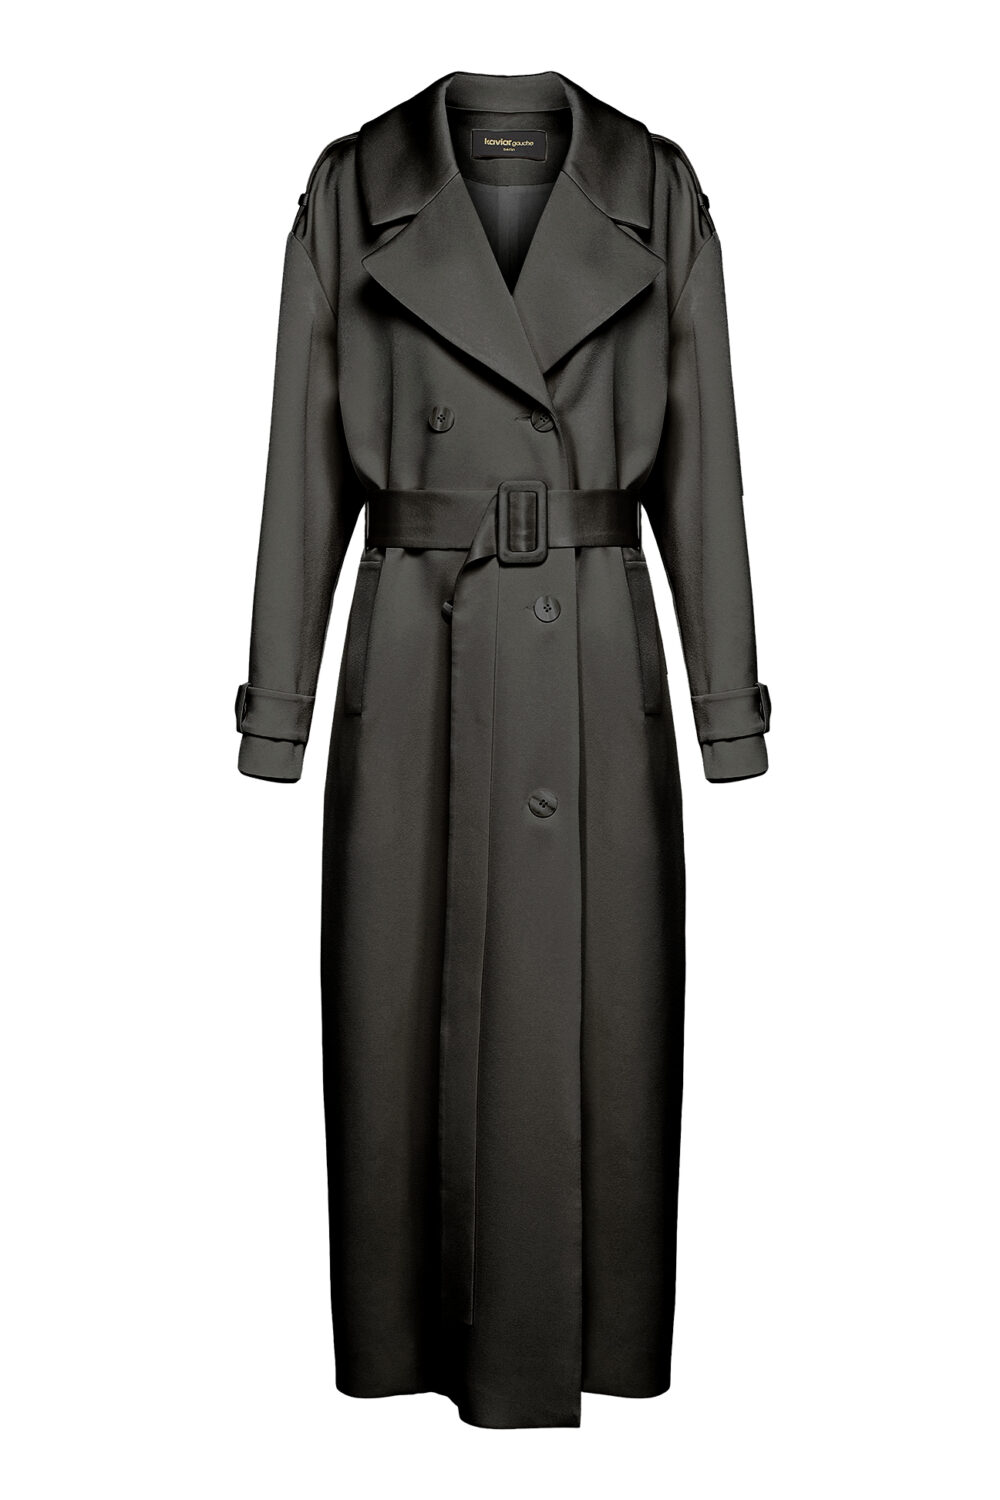 Clochard Coat in black by Kaviar Gauche